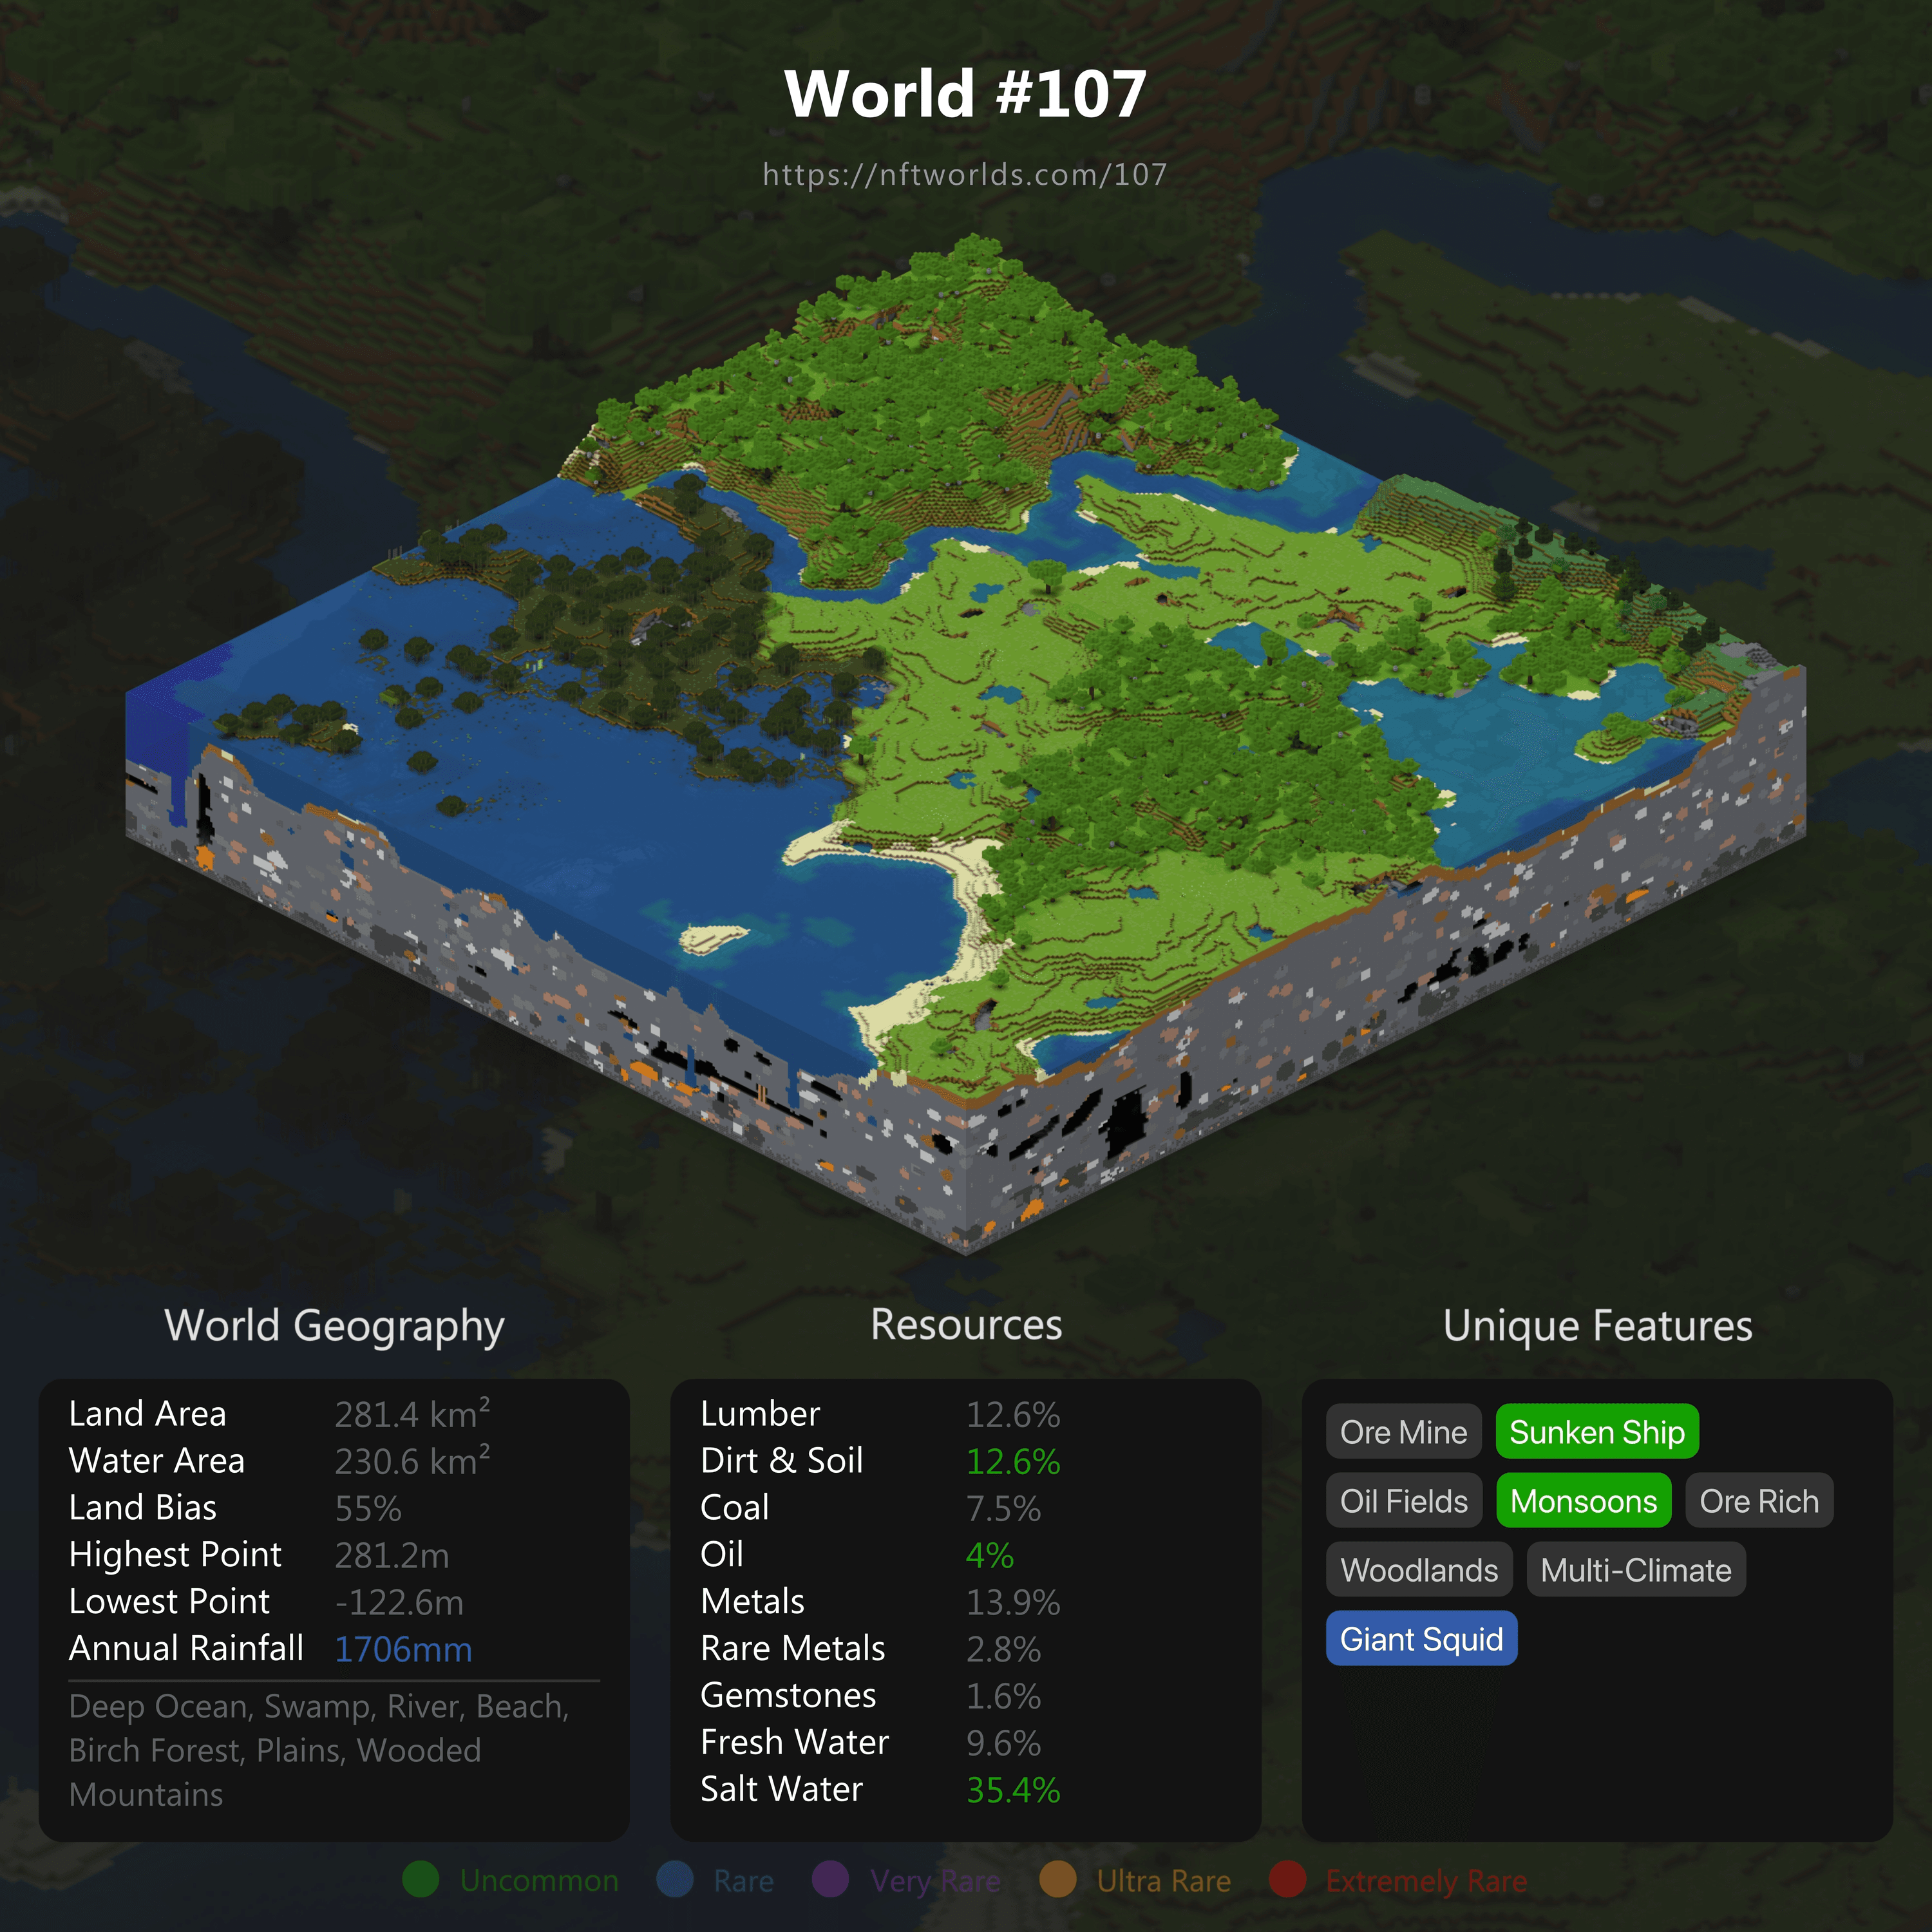 World #107